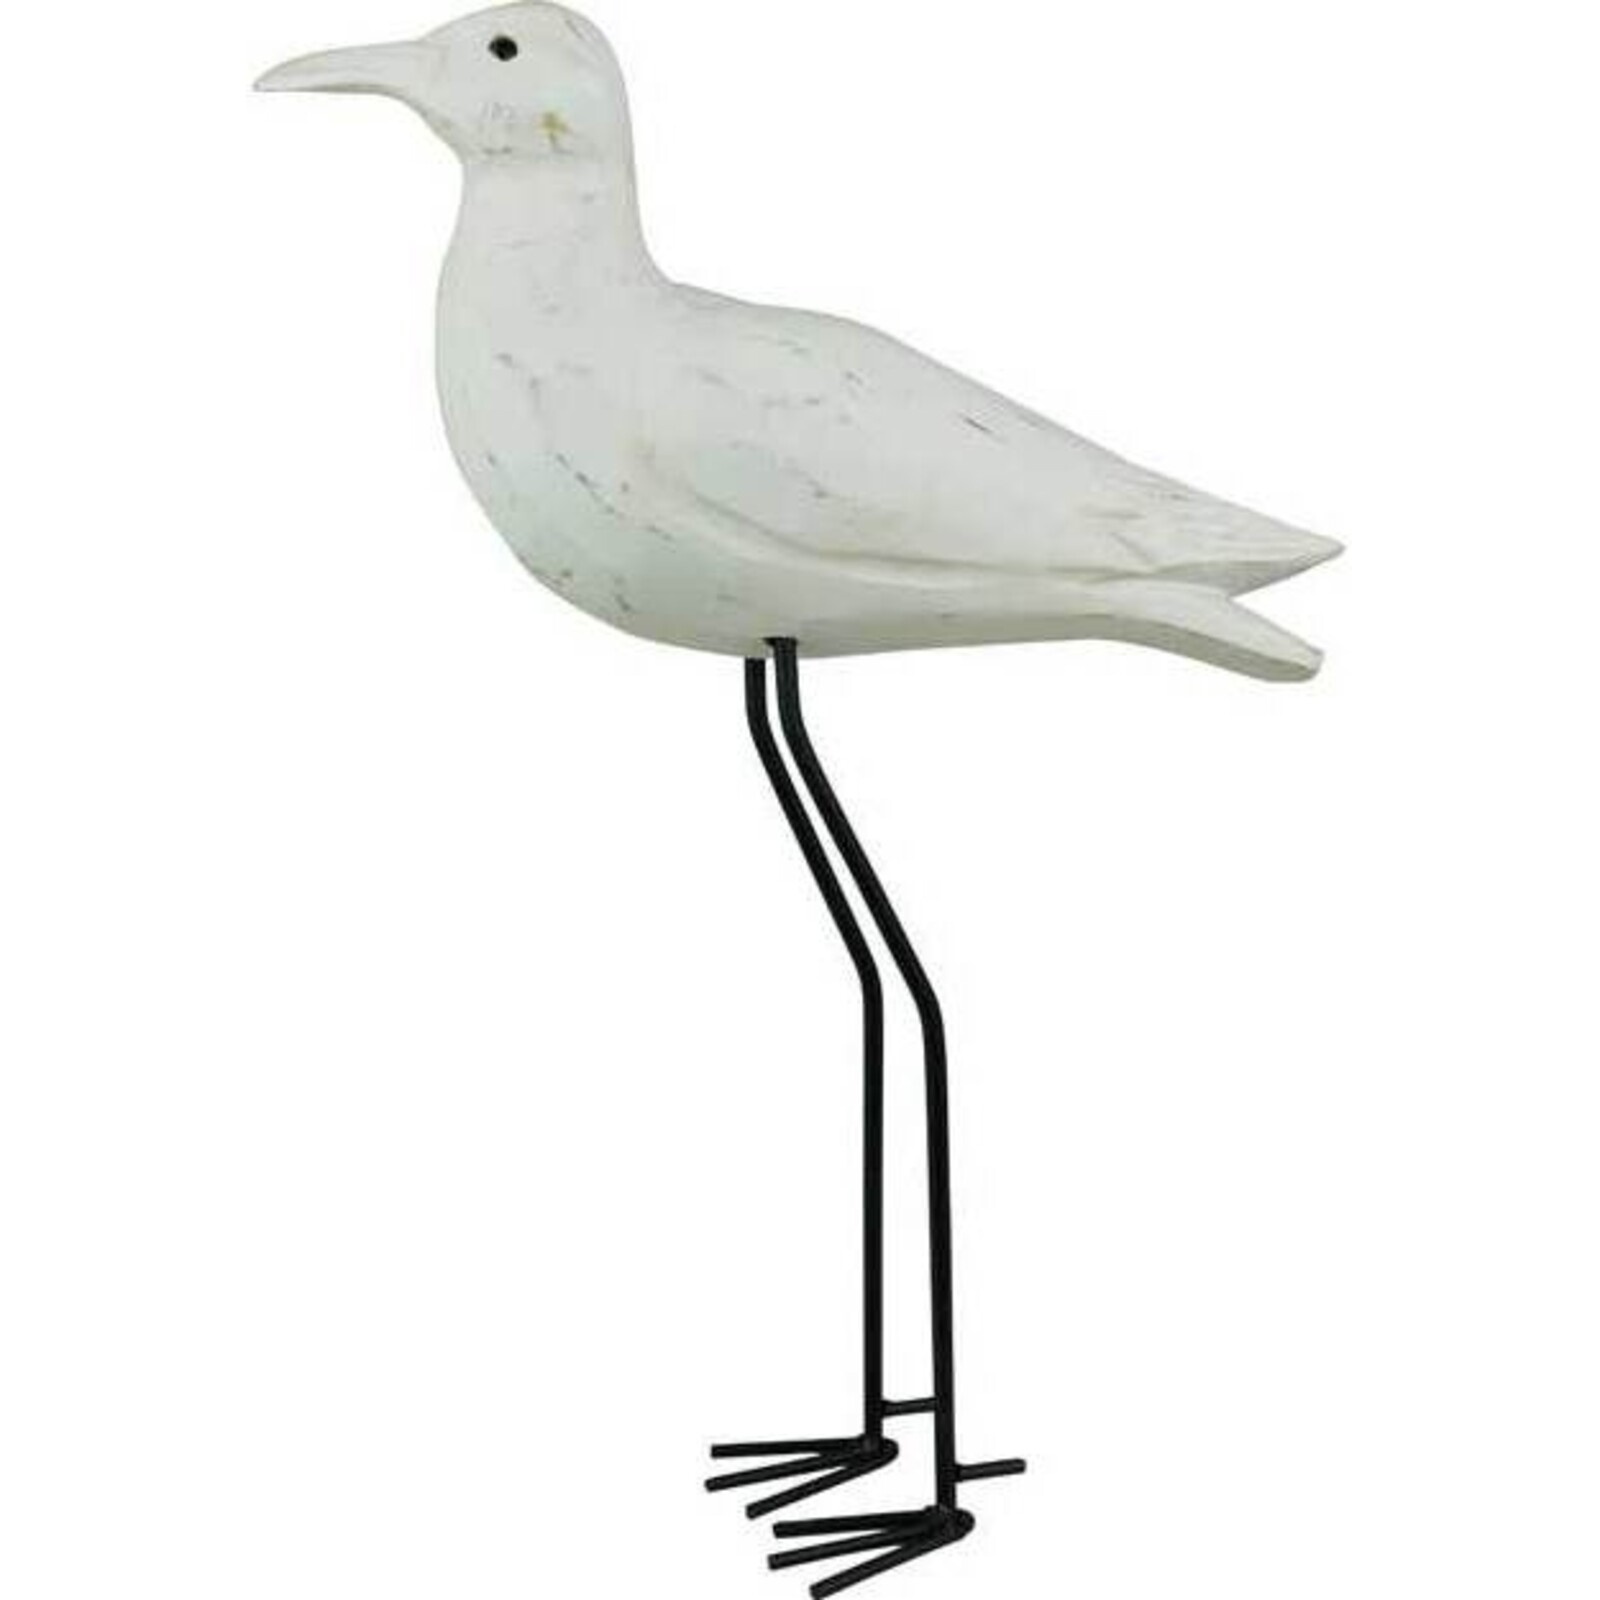 Standing Seagull Whitewash